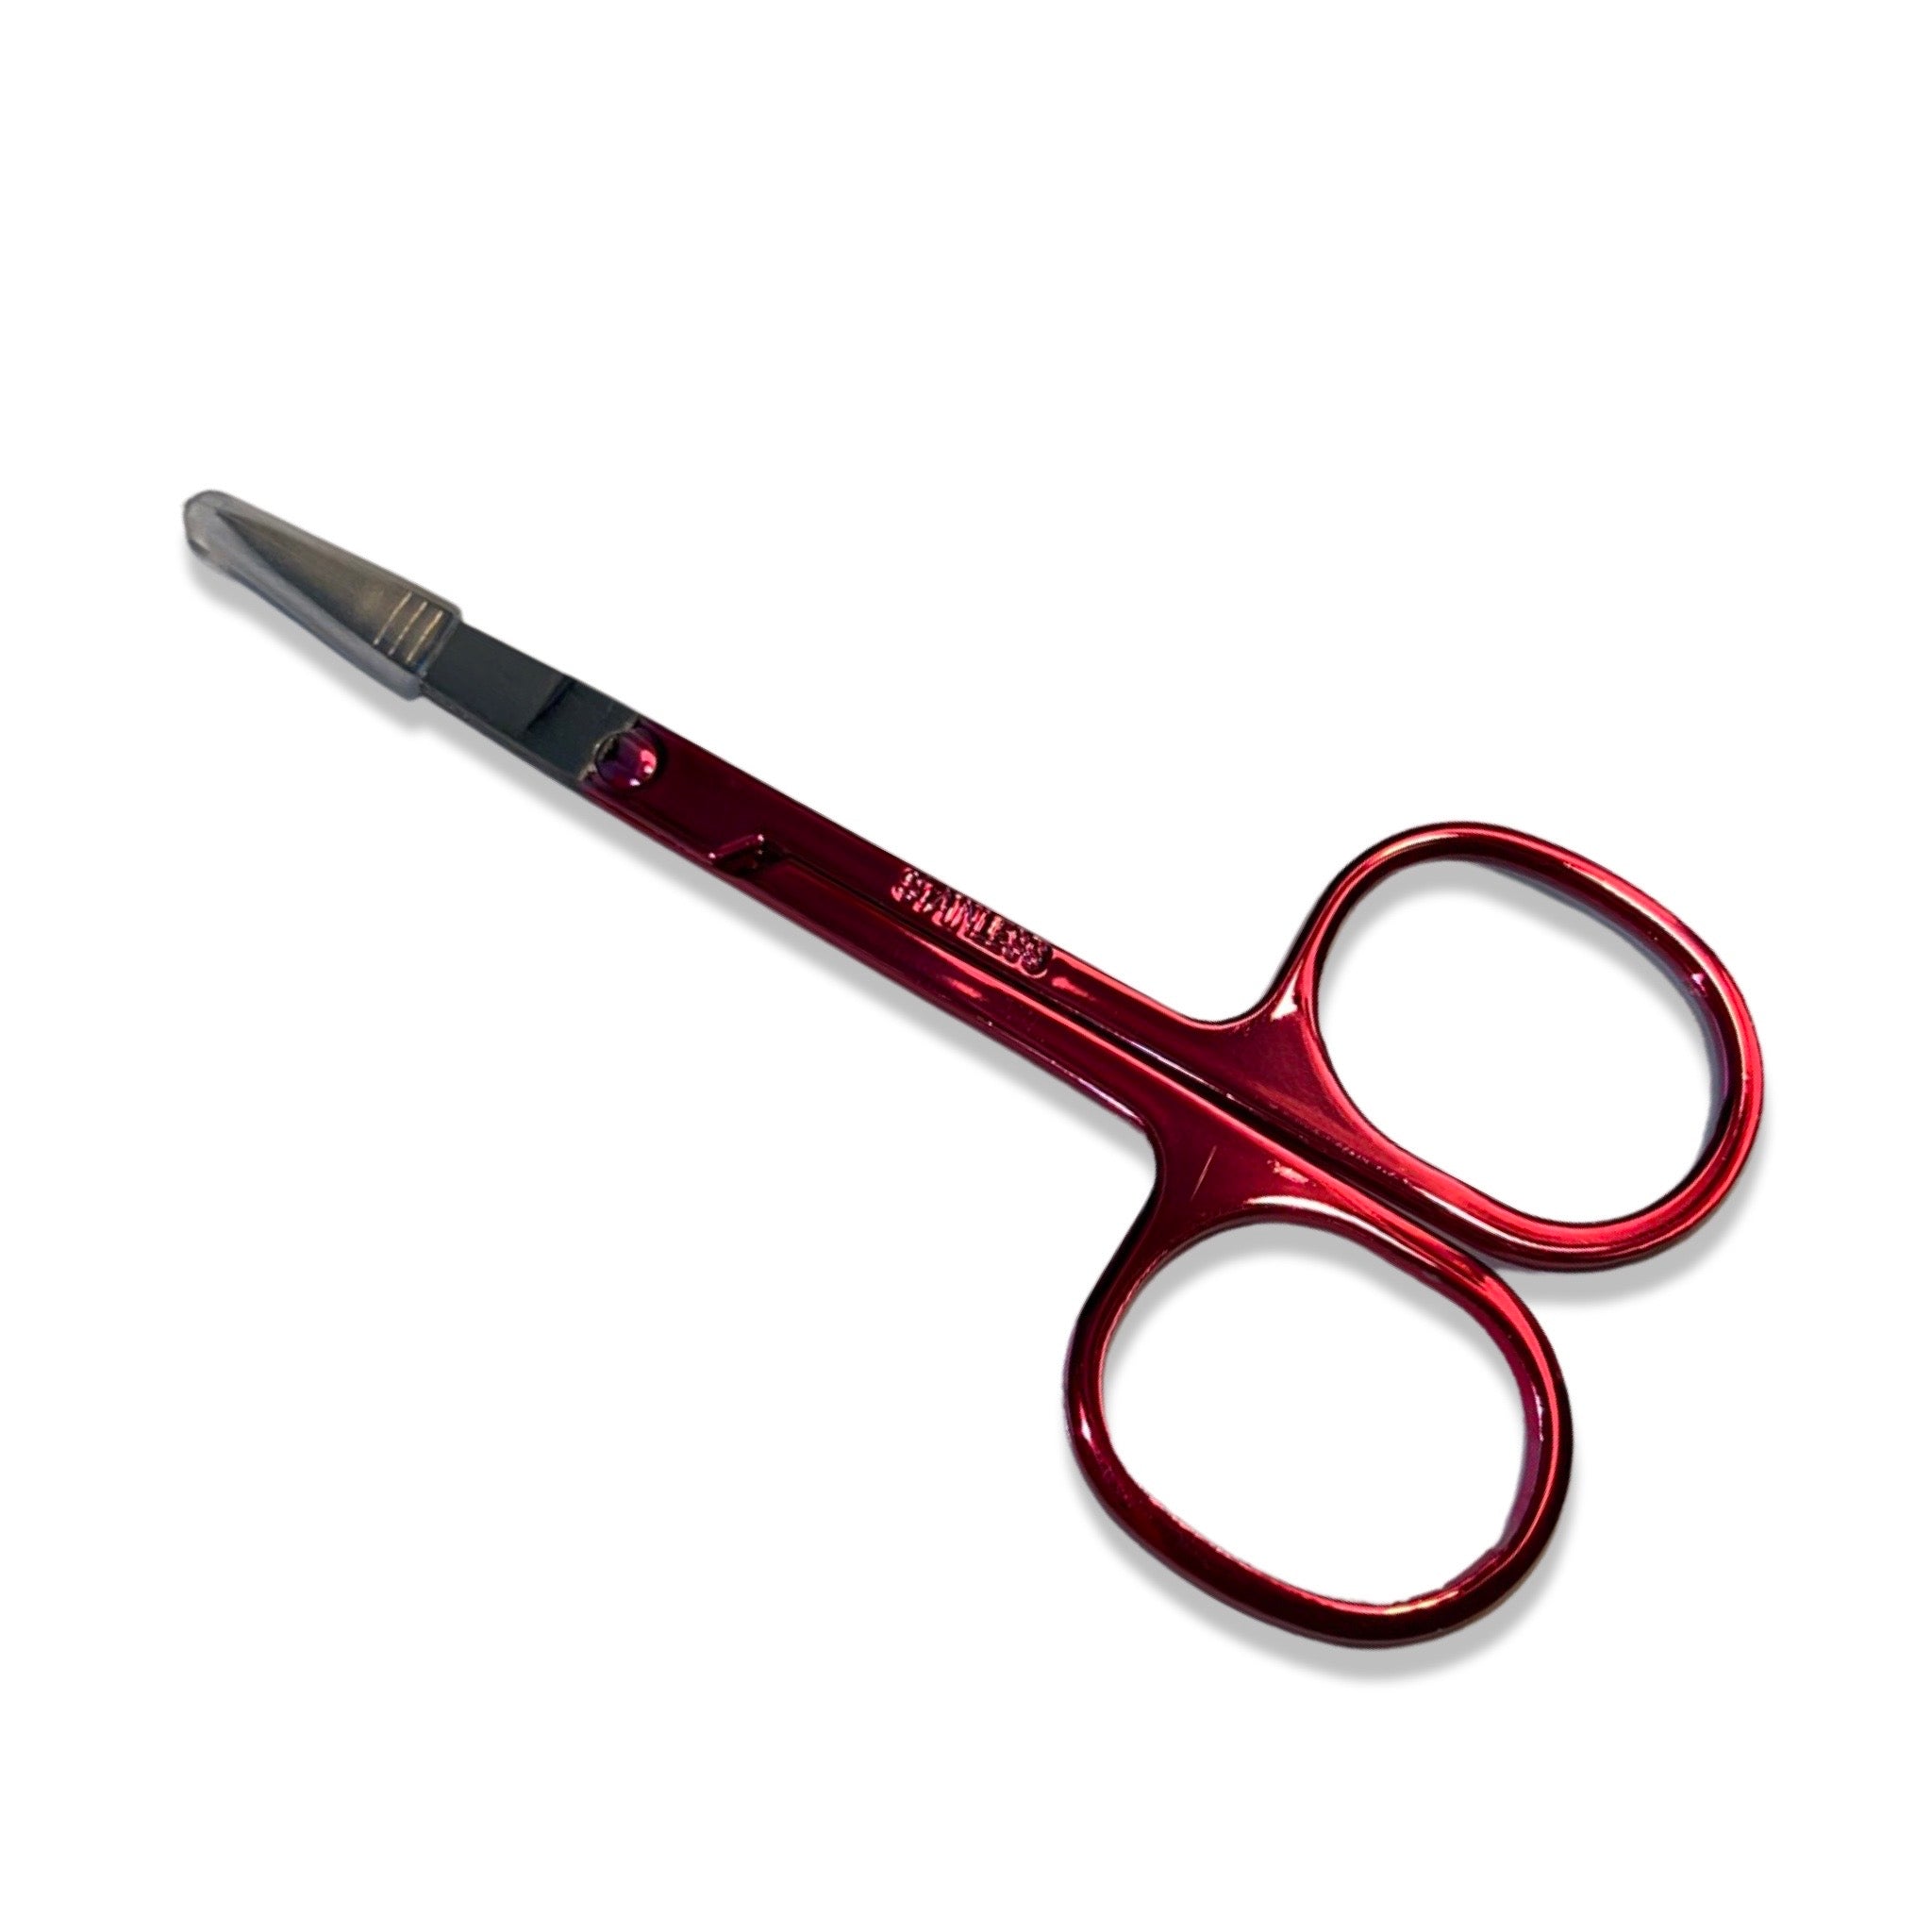 Small lash scissors